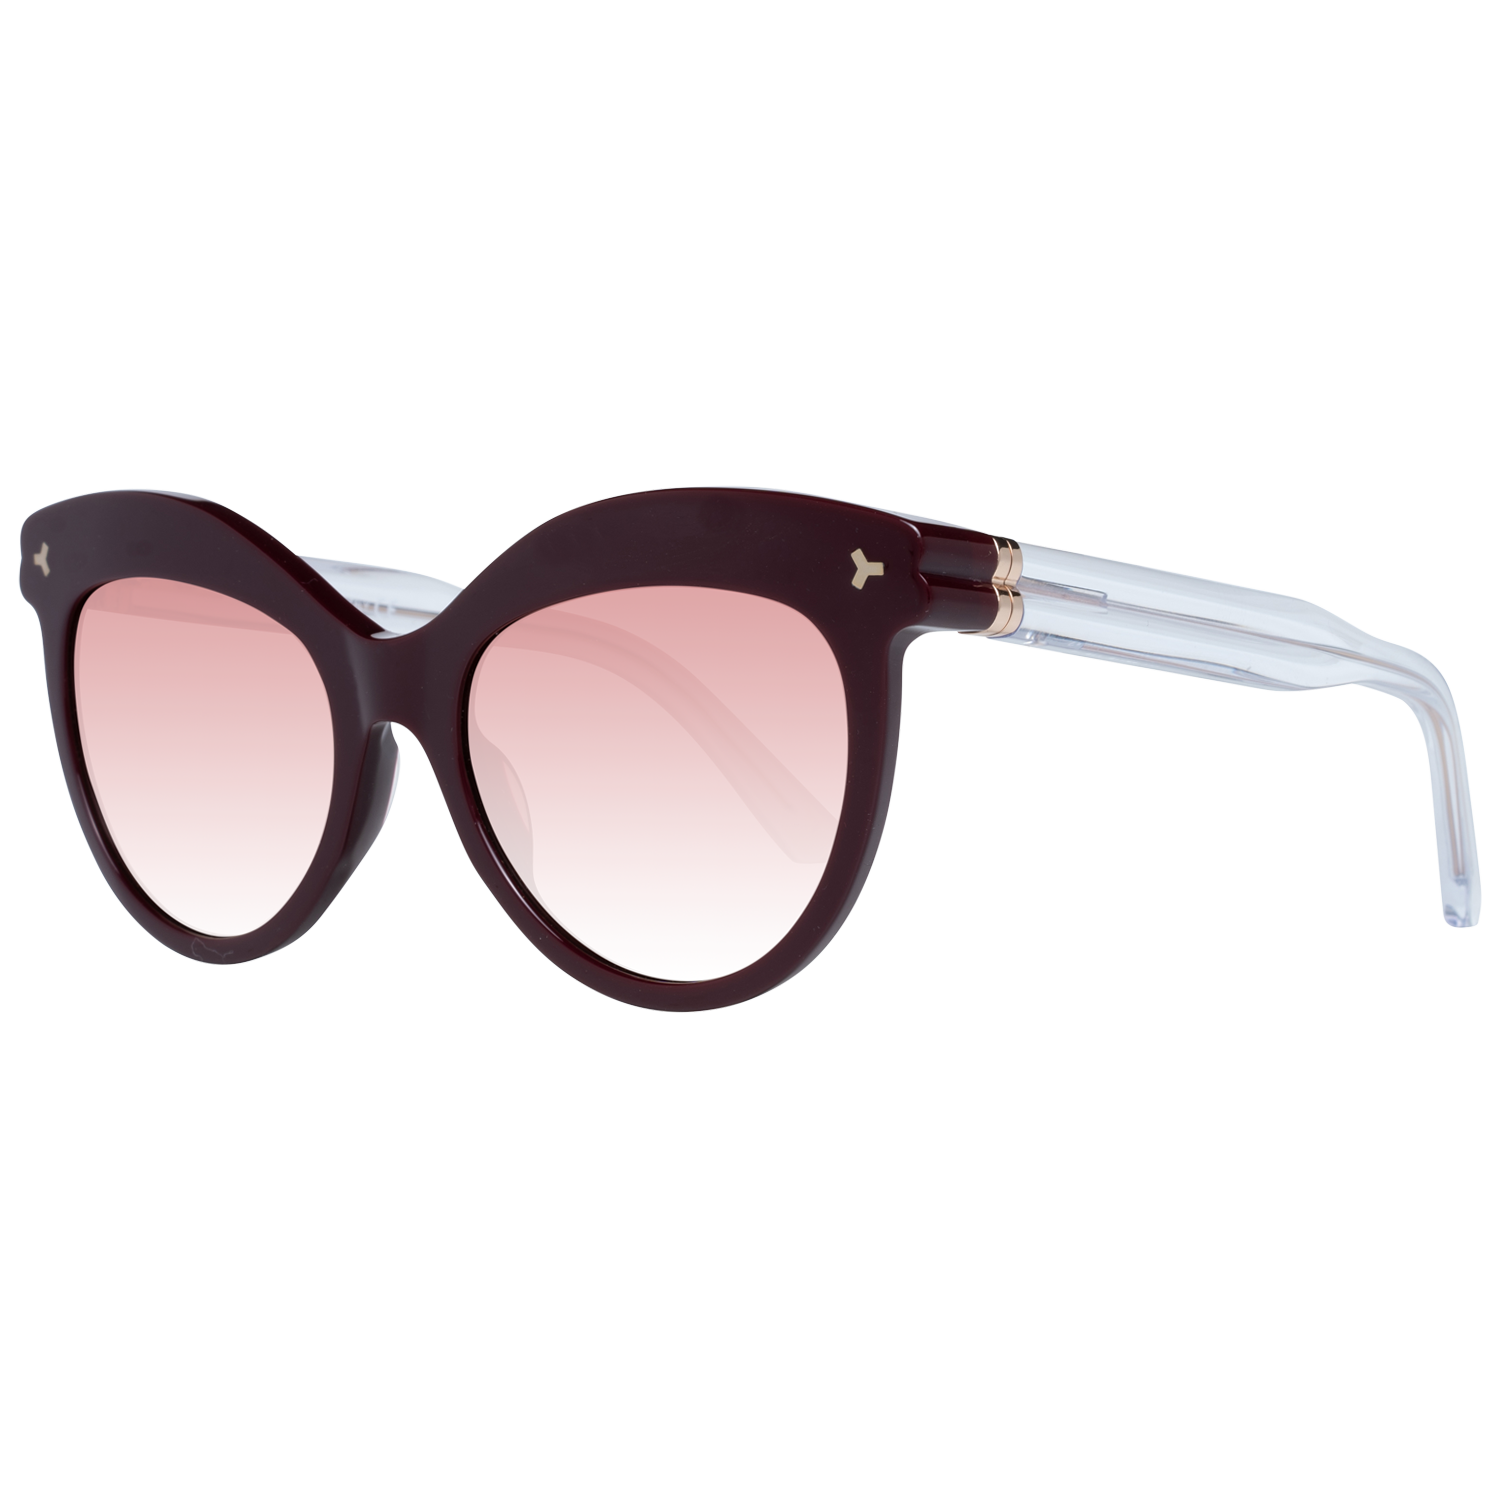 Bally Sunglasses Bally Sunglasses BY0054 69T 55 Eyeglasses Eyewear UK USA Australia 